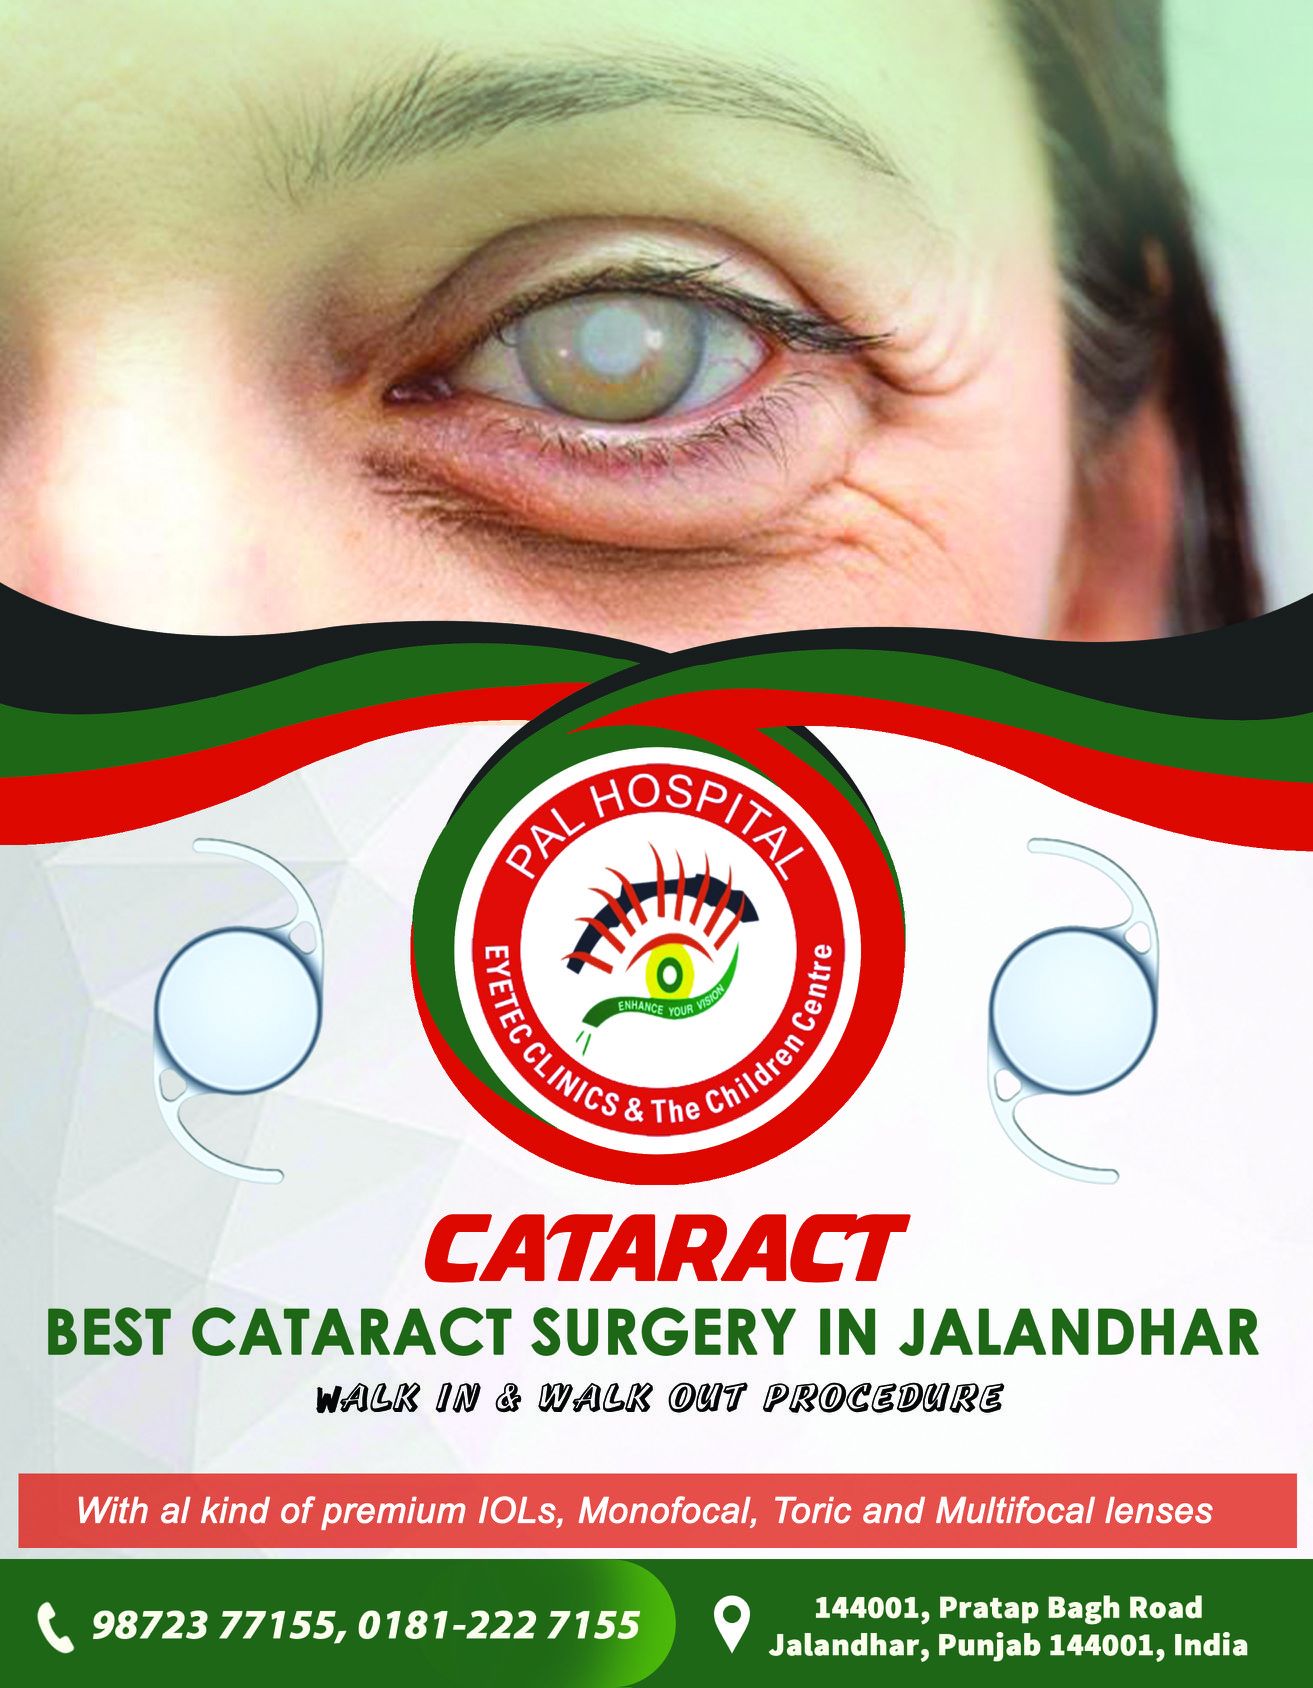 Motiyabind treatment - Best Cataract Treatment in Jalandhar at Pal Hospital Eyetec Clinics & The Children Centre